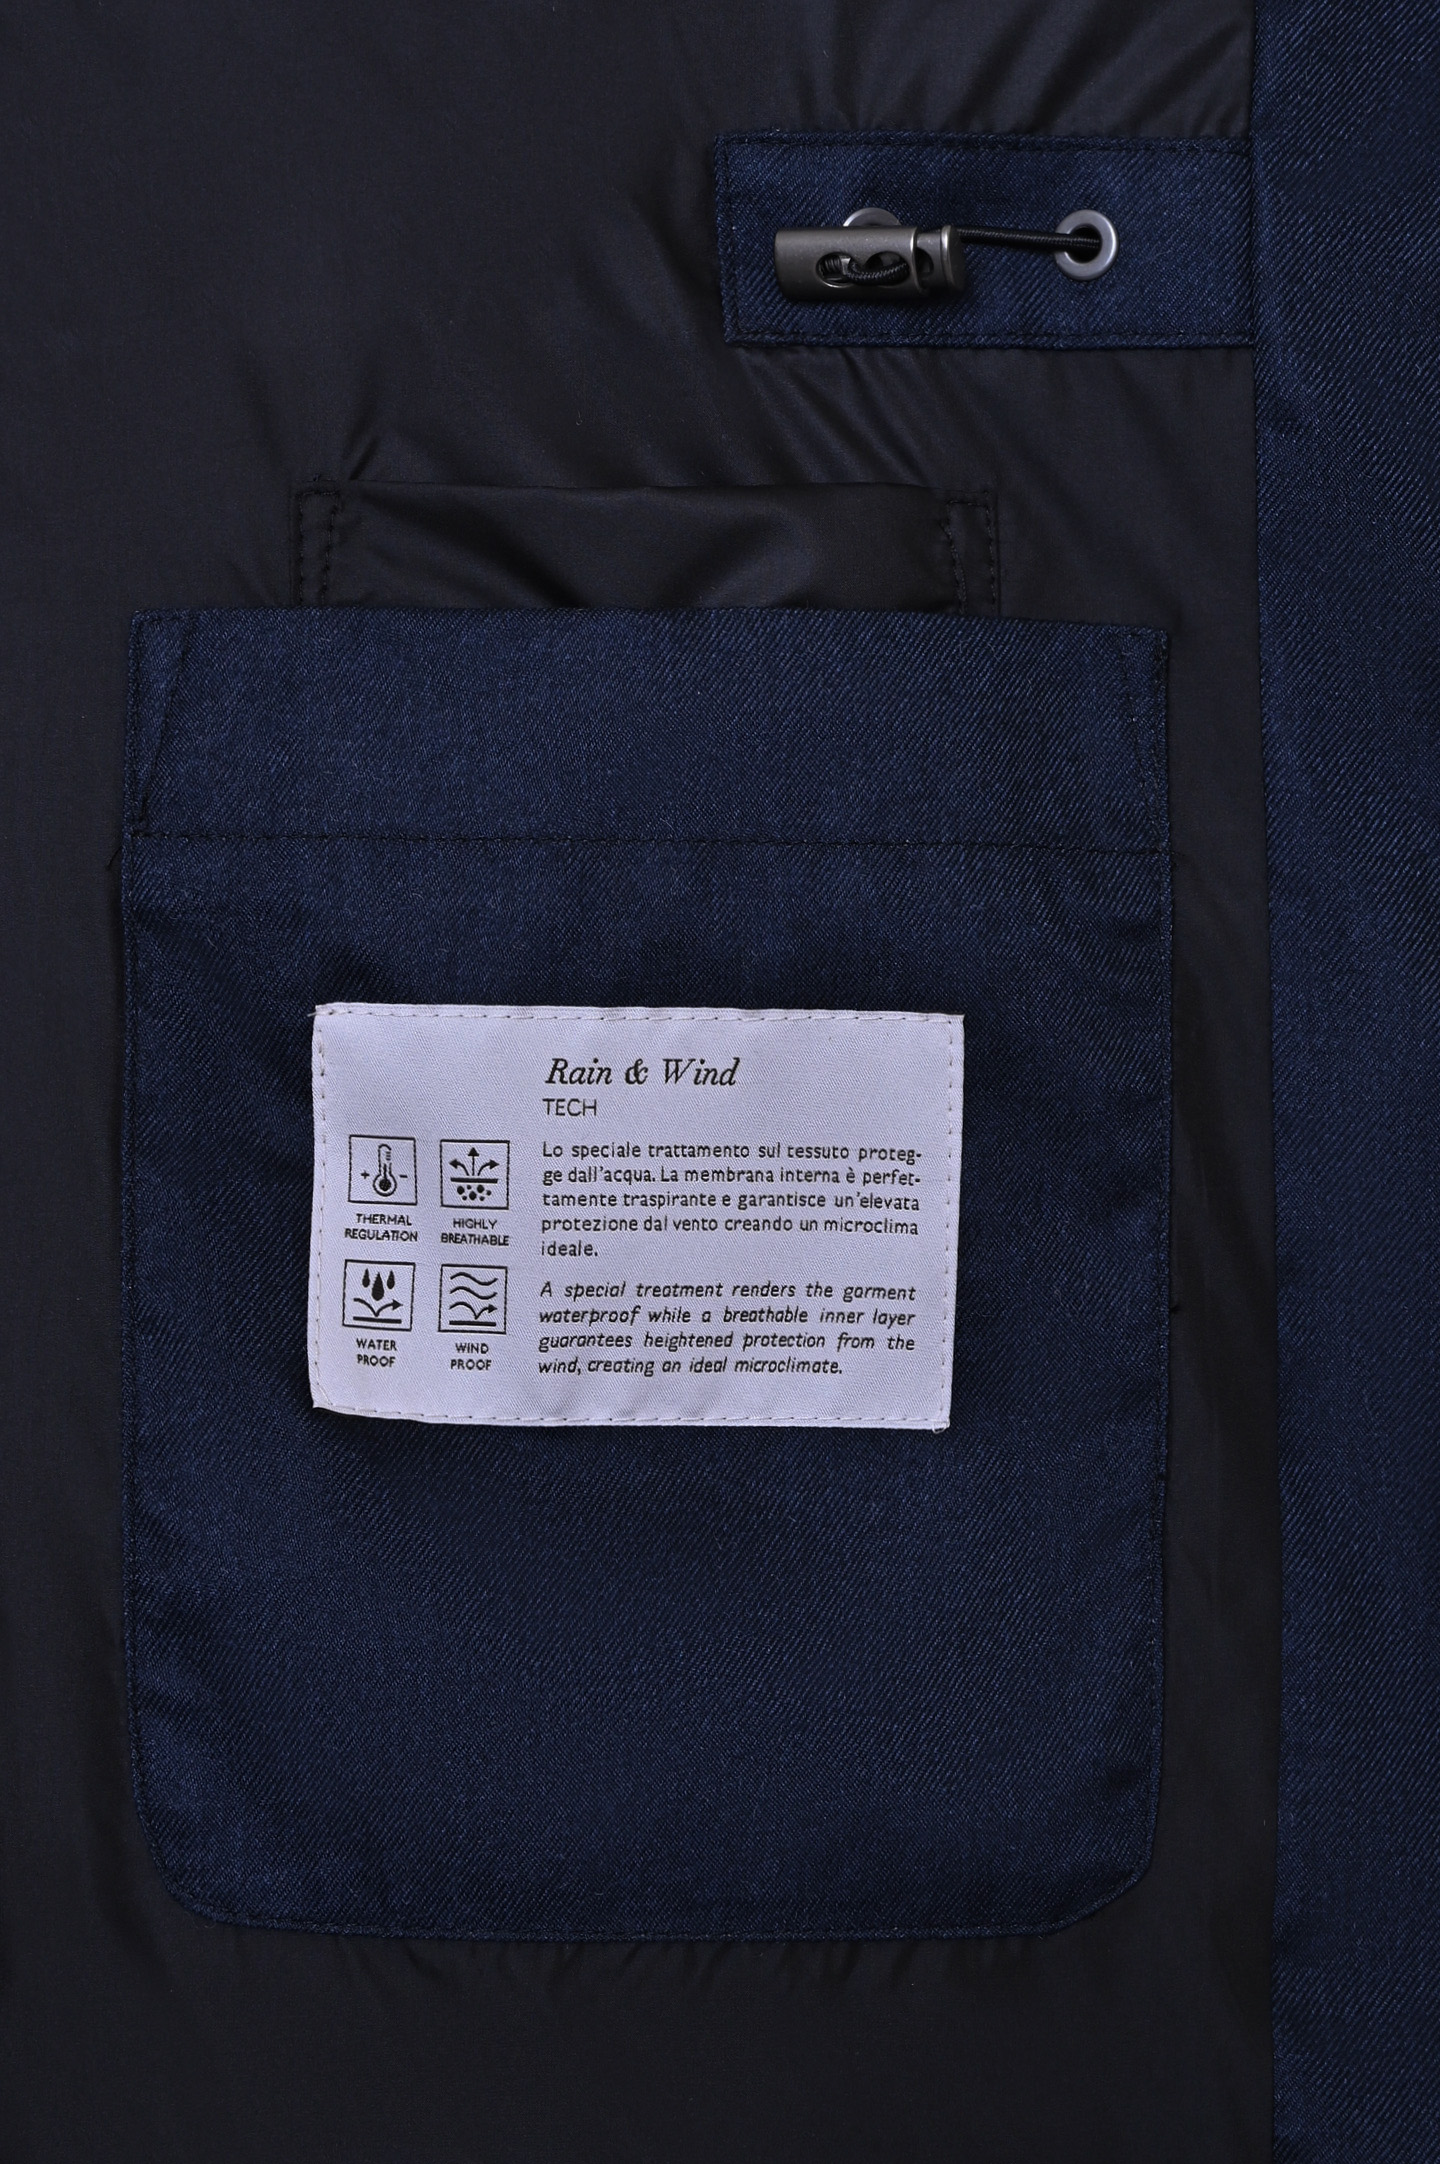 Куртка CANALI SG02732 O20353, цвет: Синий, Мужской